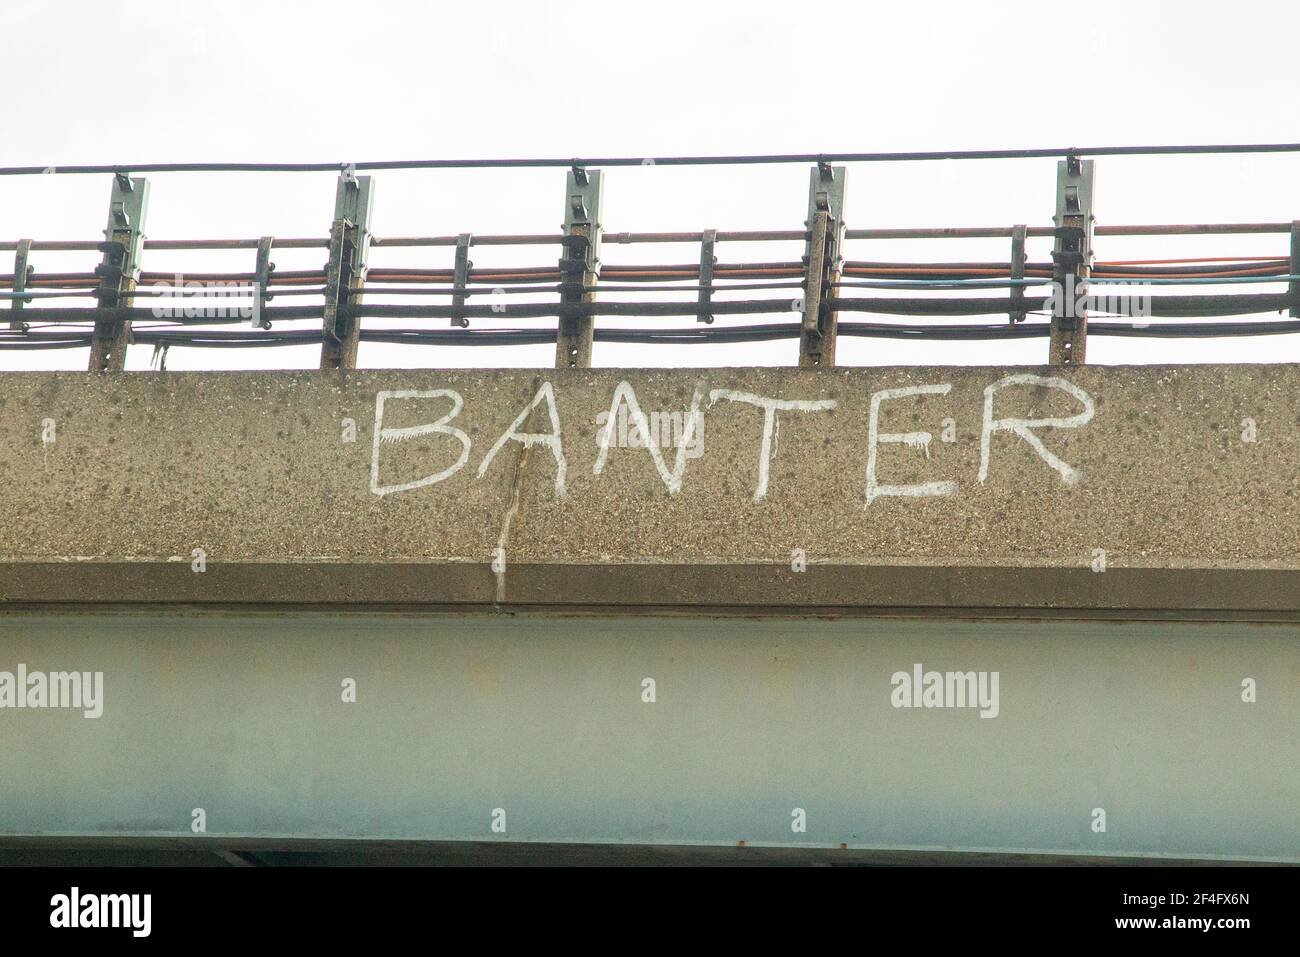 La parola "Banter" scritta su un ponte autostradale Foto Stock